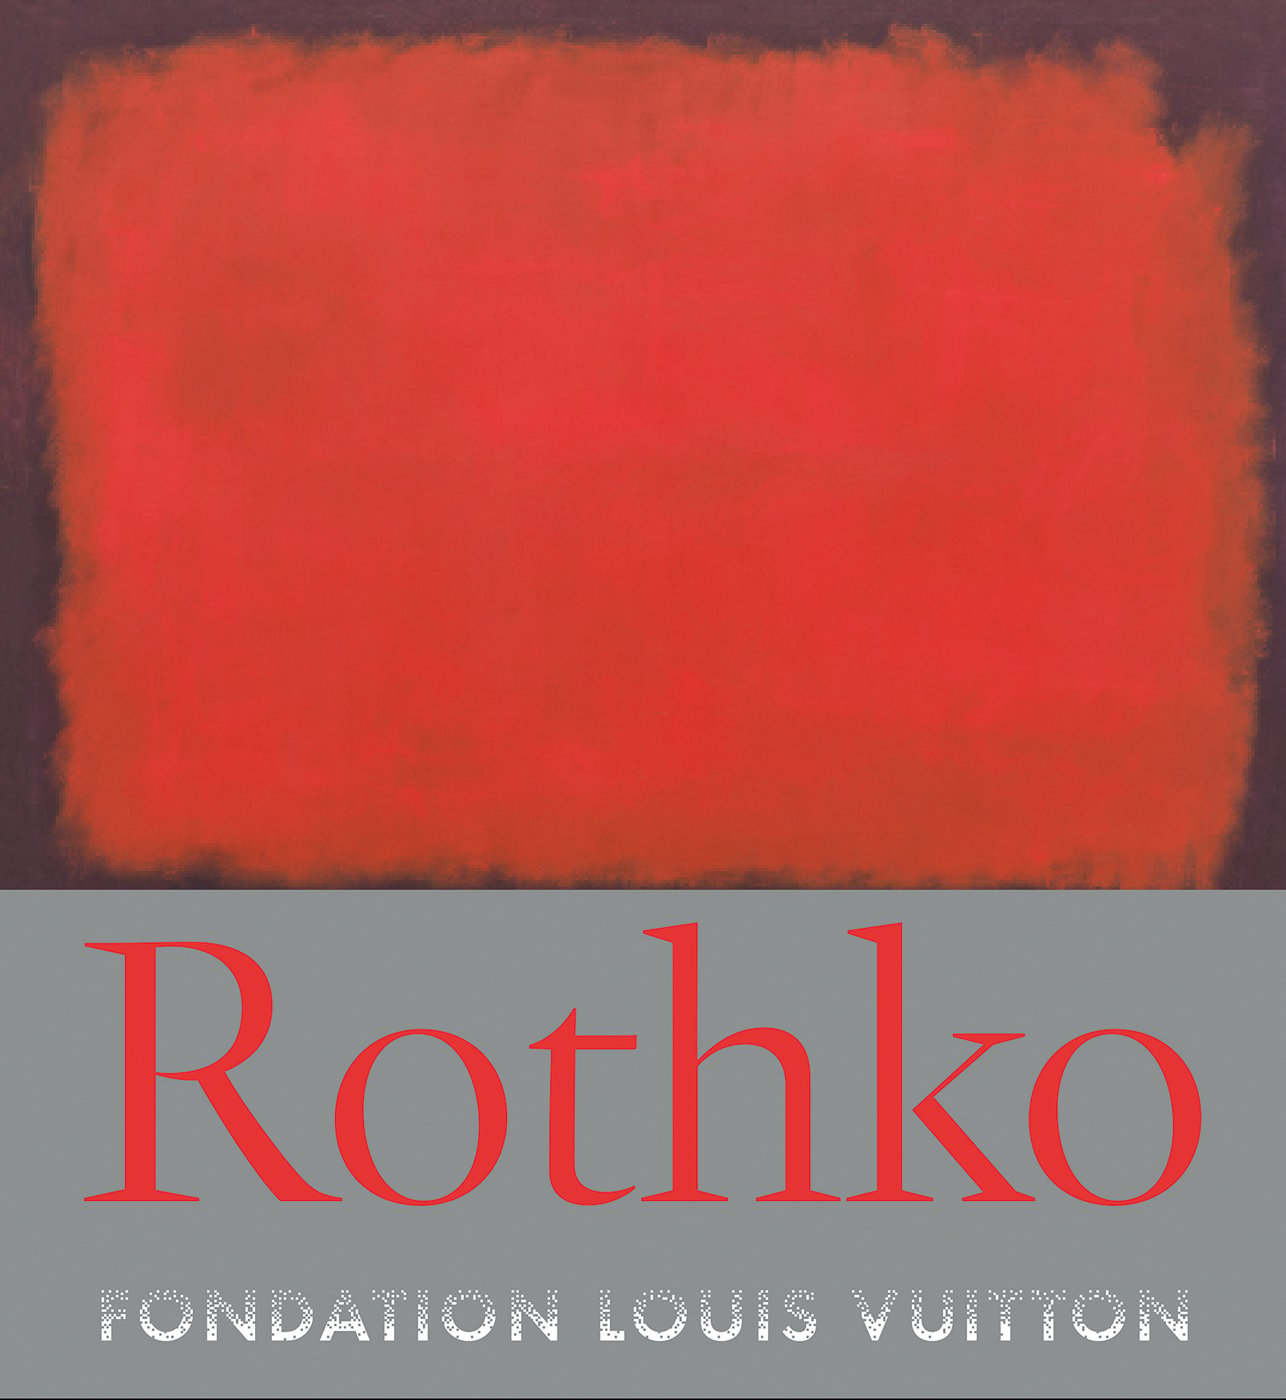 MARK ROTHKO'S RETROSPECTIVE OPENS AT FONDATION LOUIS VUITTON